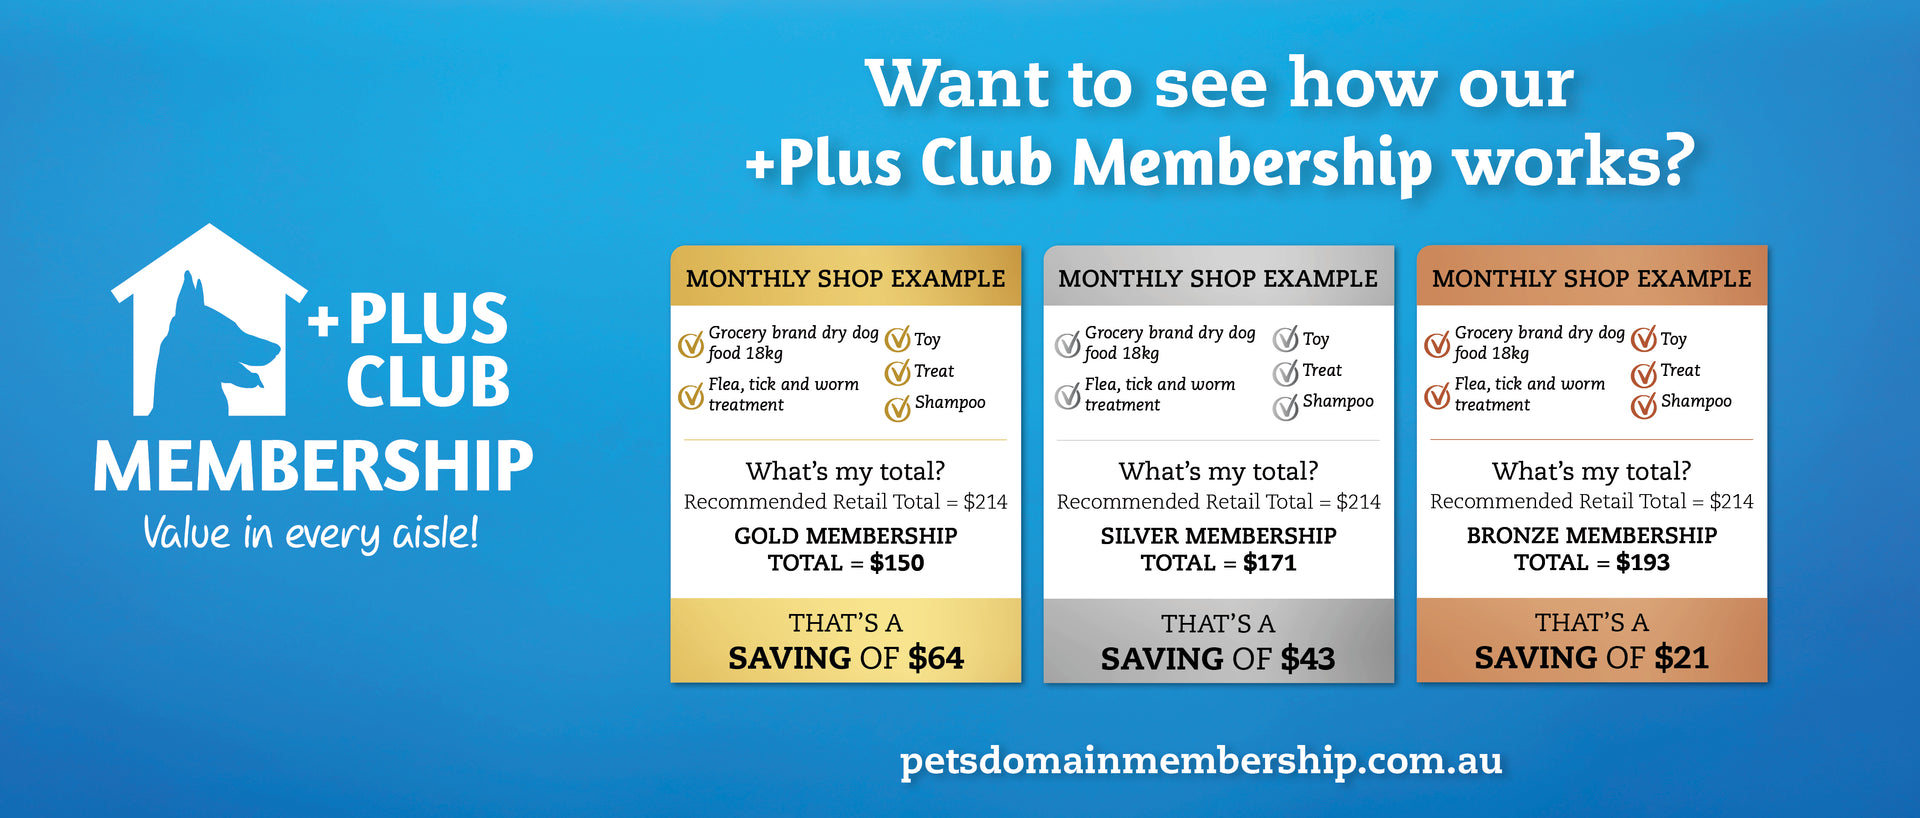 +Plus Club Membership